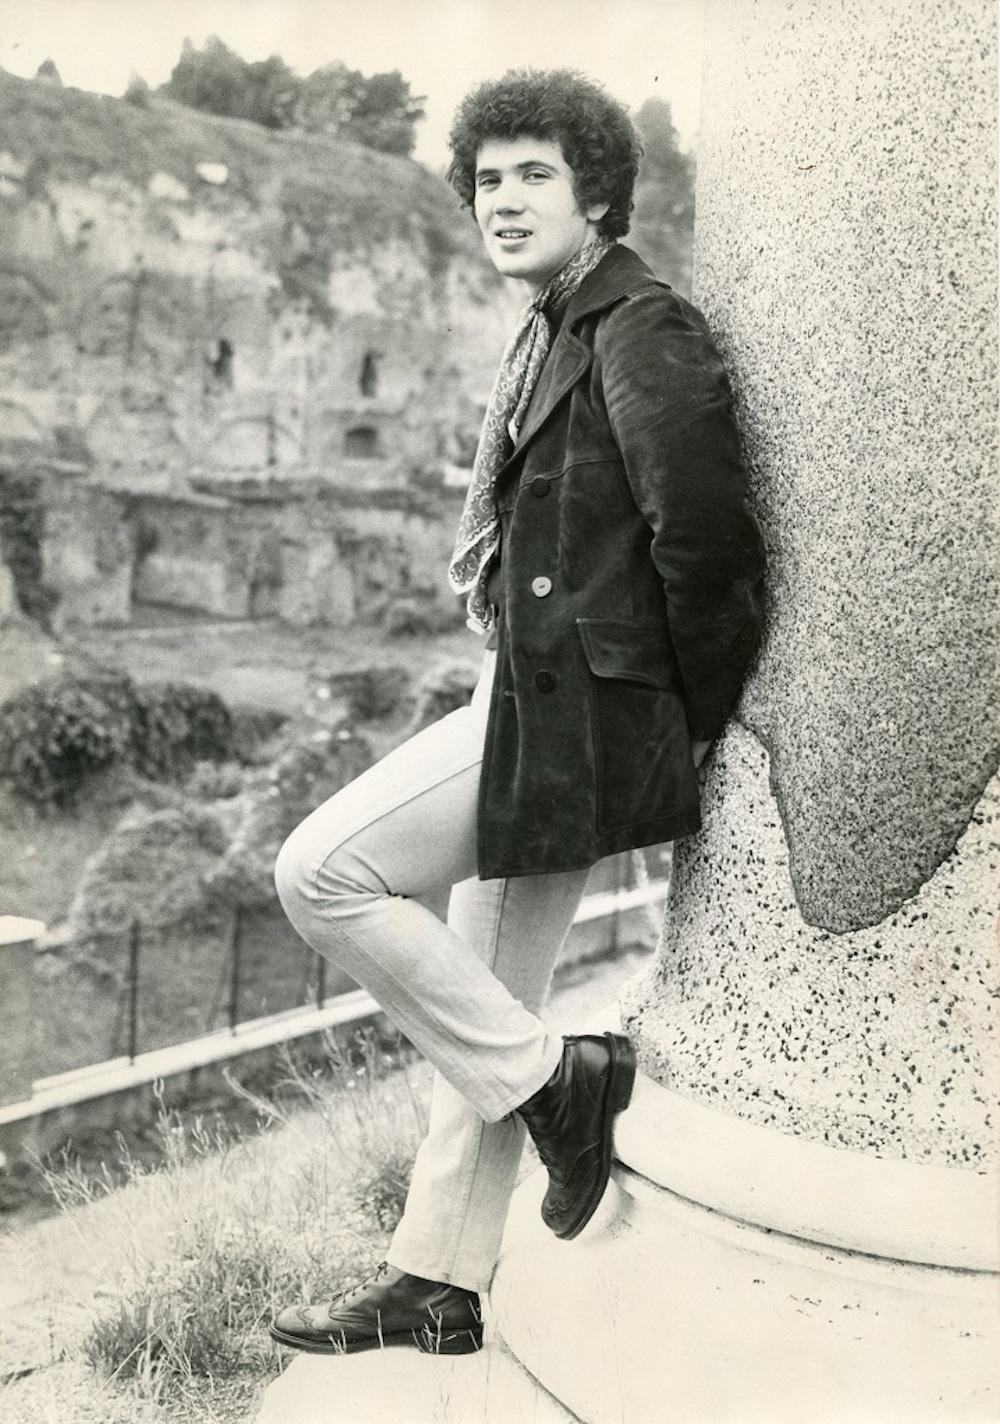 Unknown Portrait Photograph - Full Portrait of Italian Singer Lucio Battisti - Vintage Photo - Late 1960s